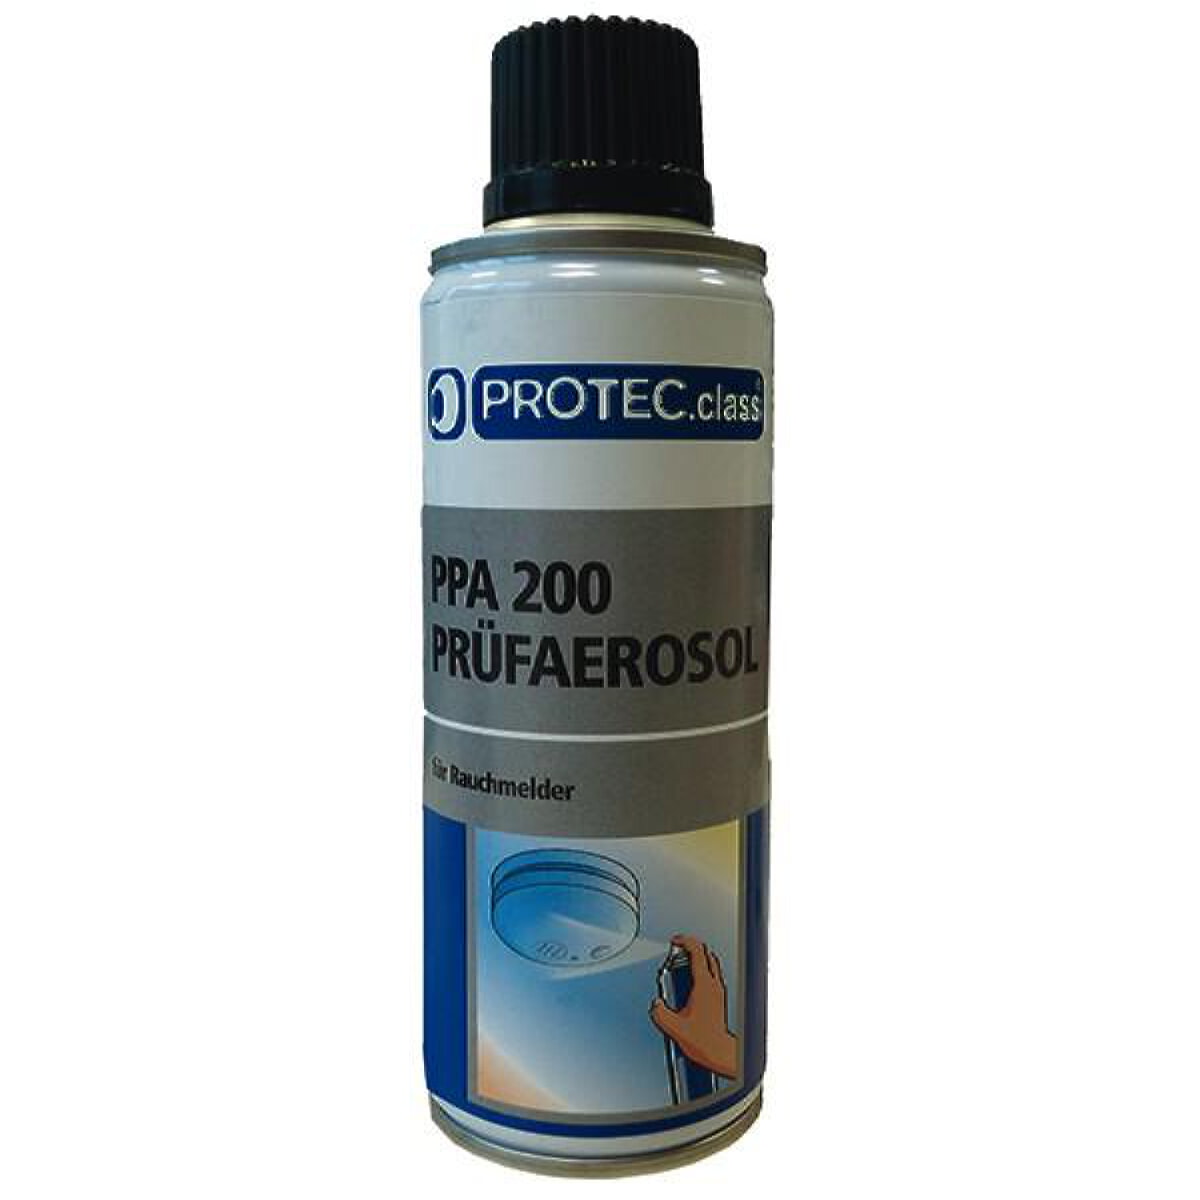 PROTEC.class Pruefaerosol PPA200 200ml für Rauchmelder